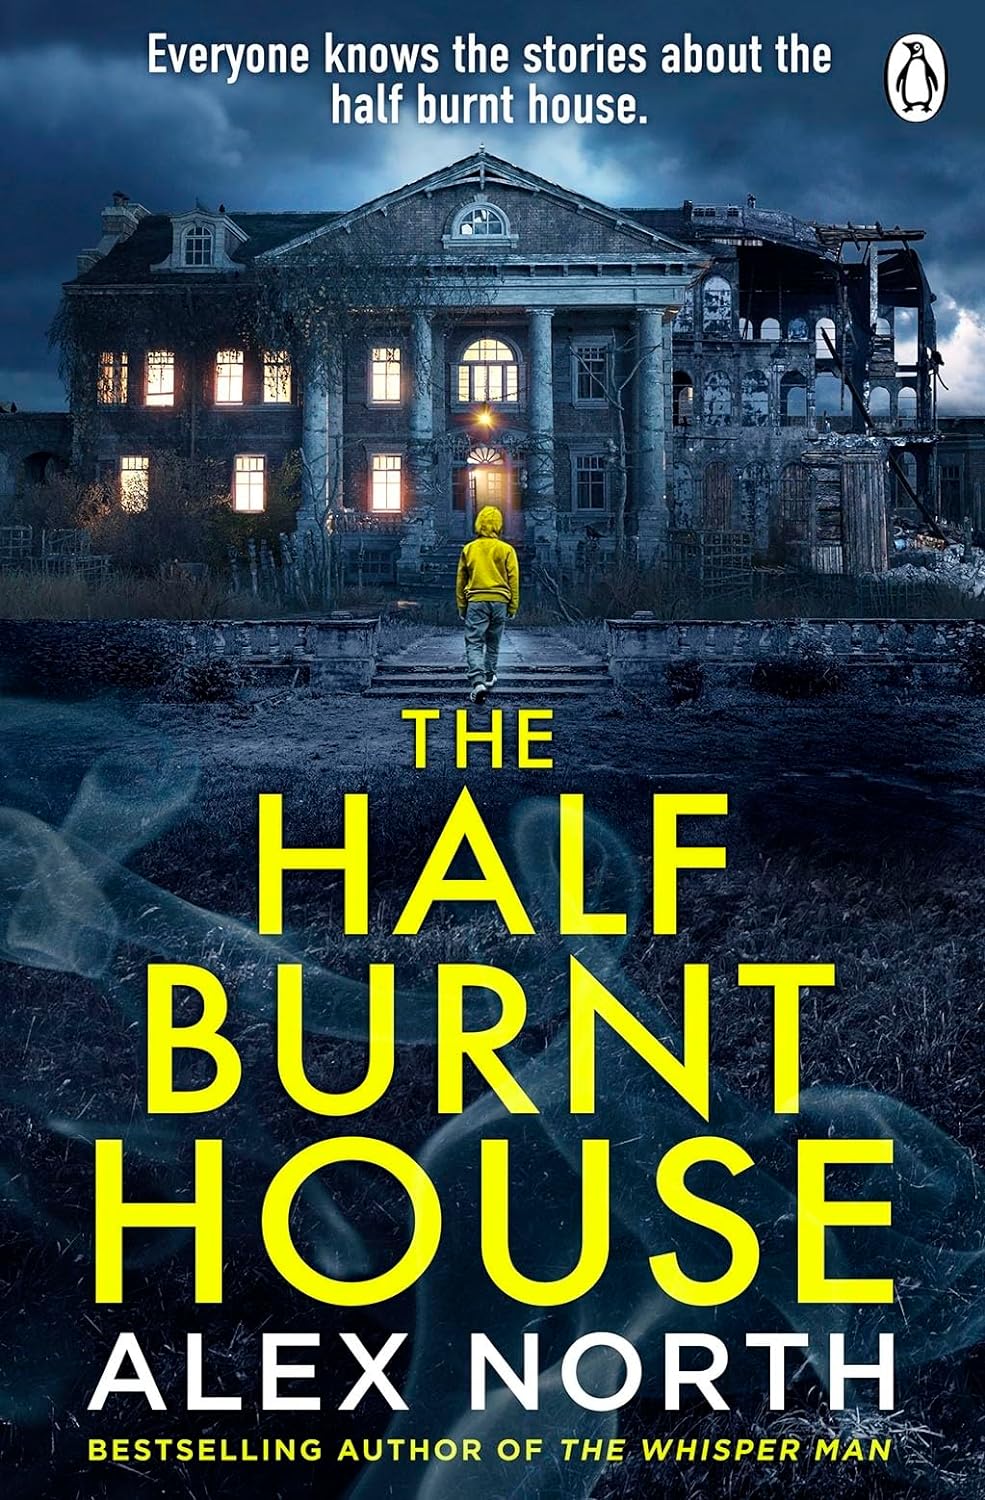 The Half Burnt House - Alex North